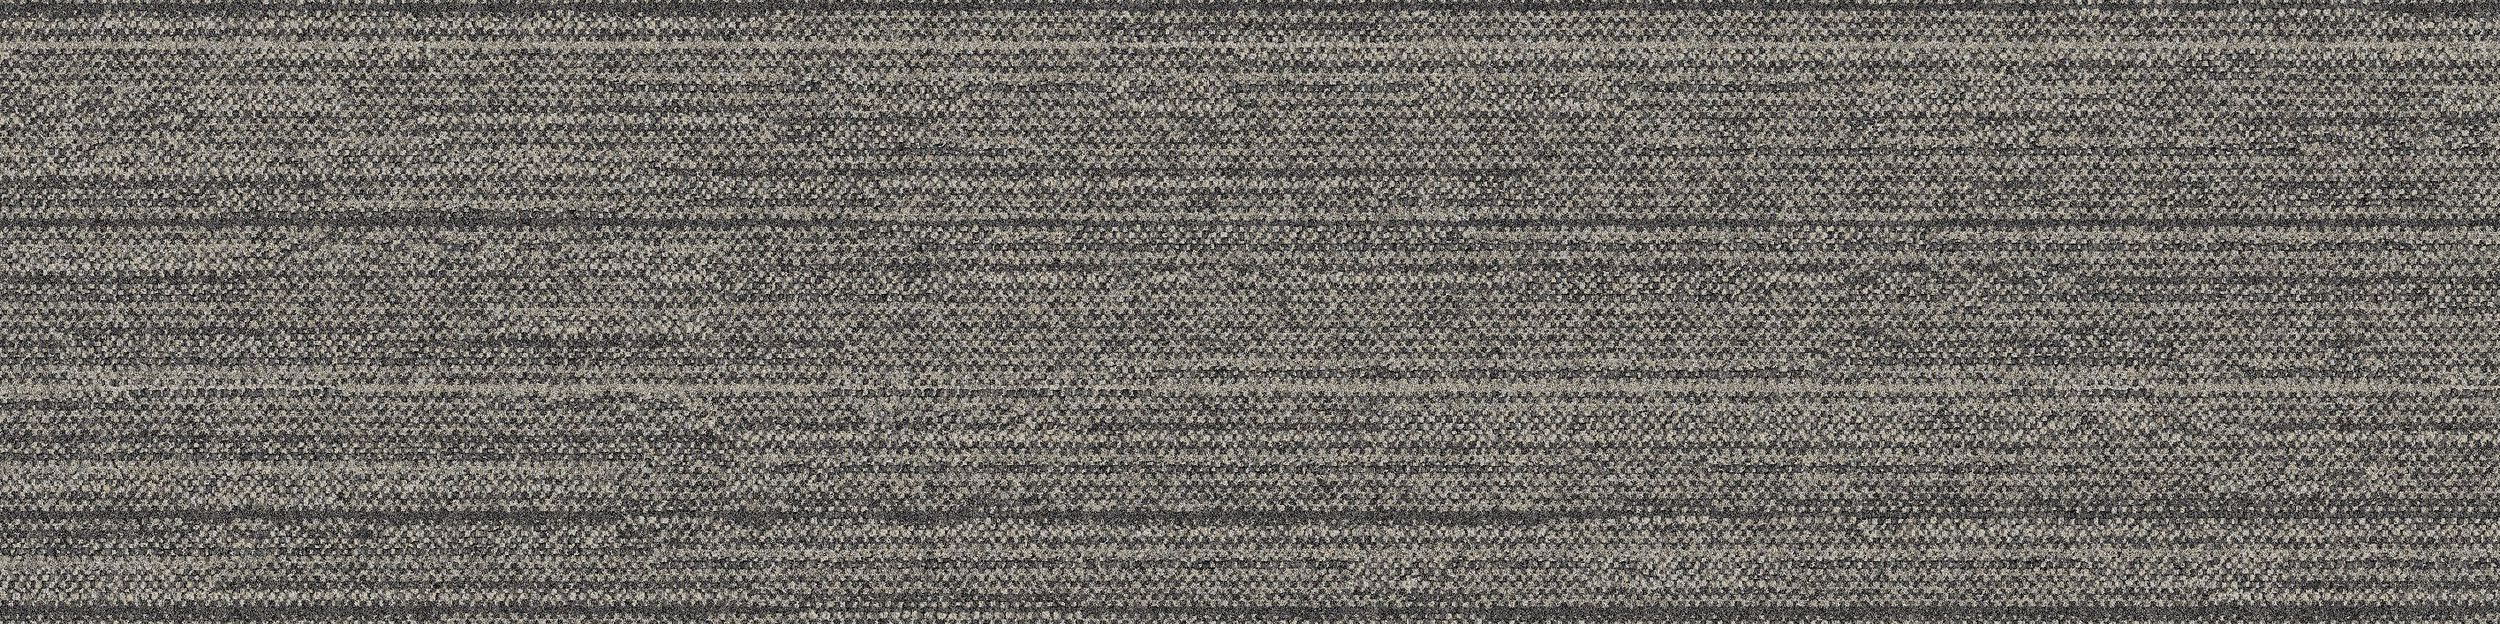 WW880 Carpet Tile In Natural Loom numéro d’image 2